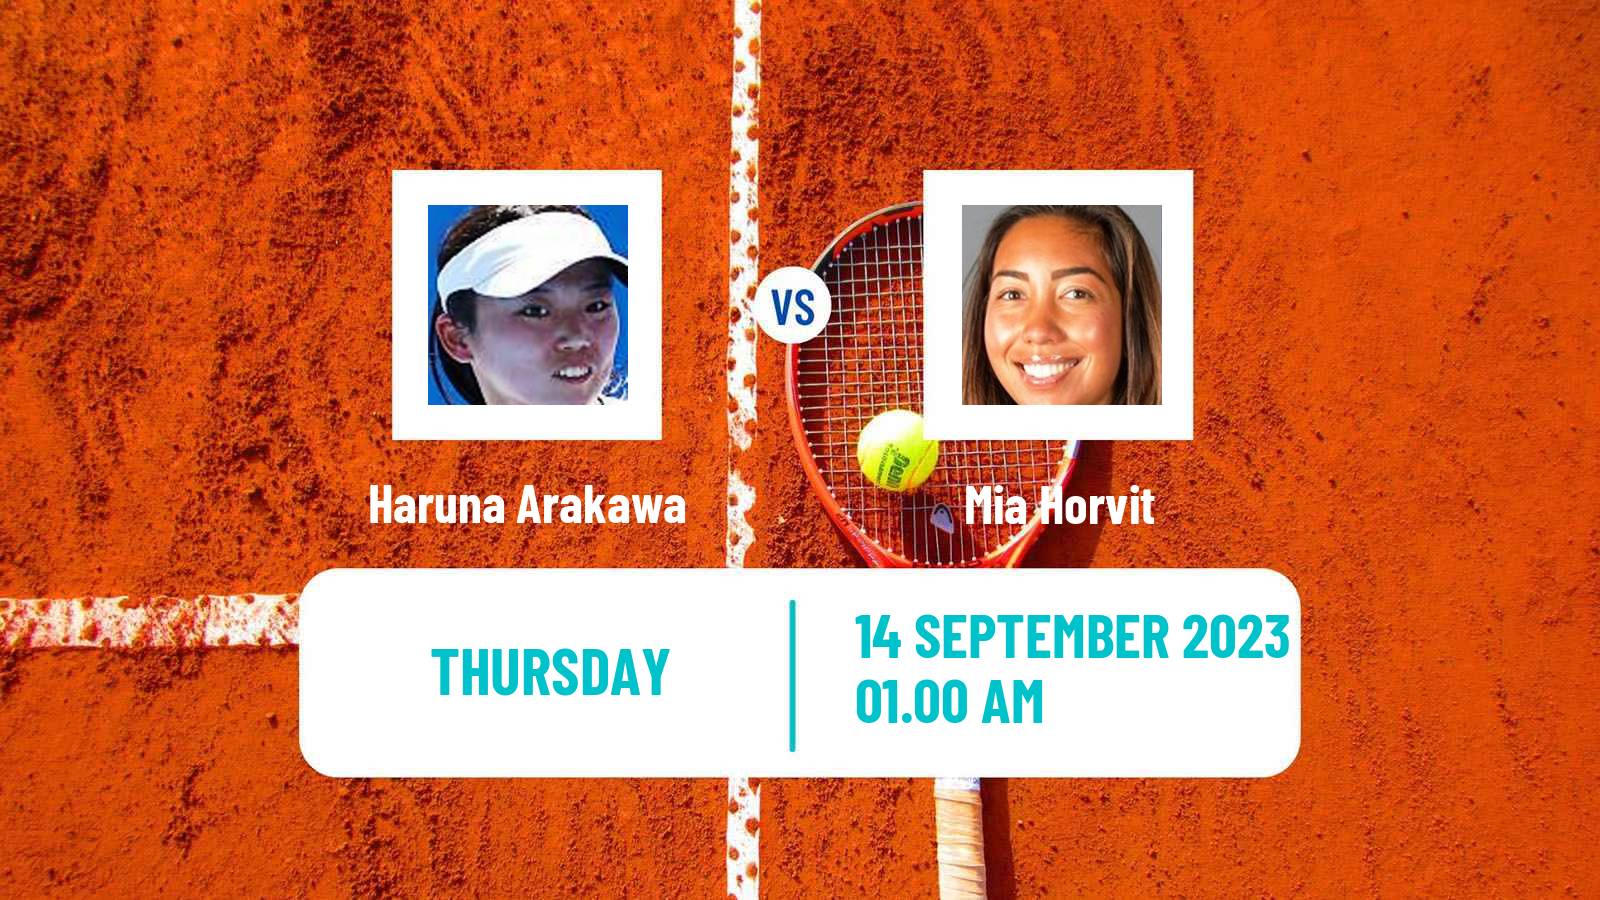 Tennis ITF W25 Perth Women Haruna Arakawa - Mia Horvit